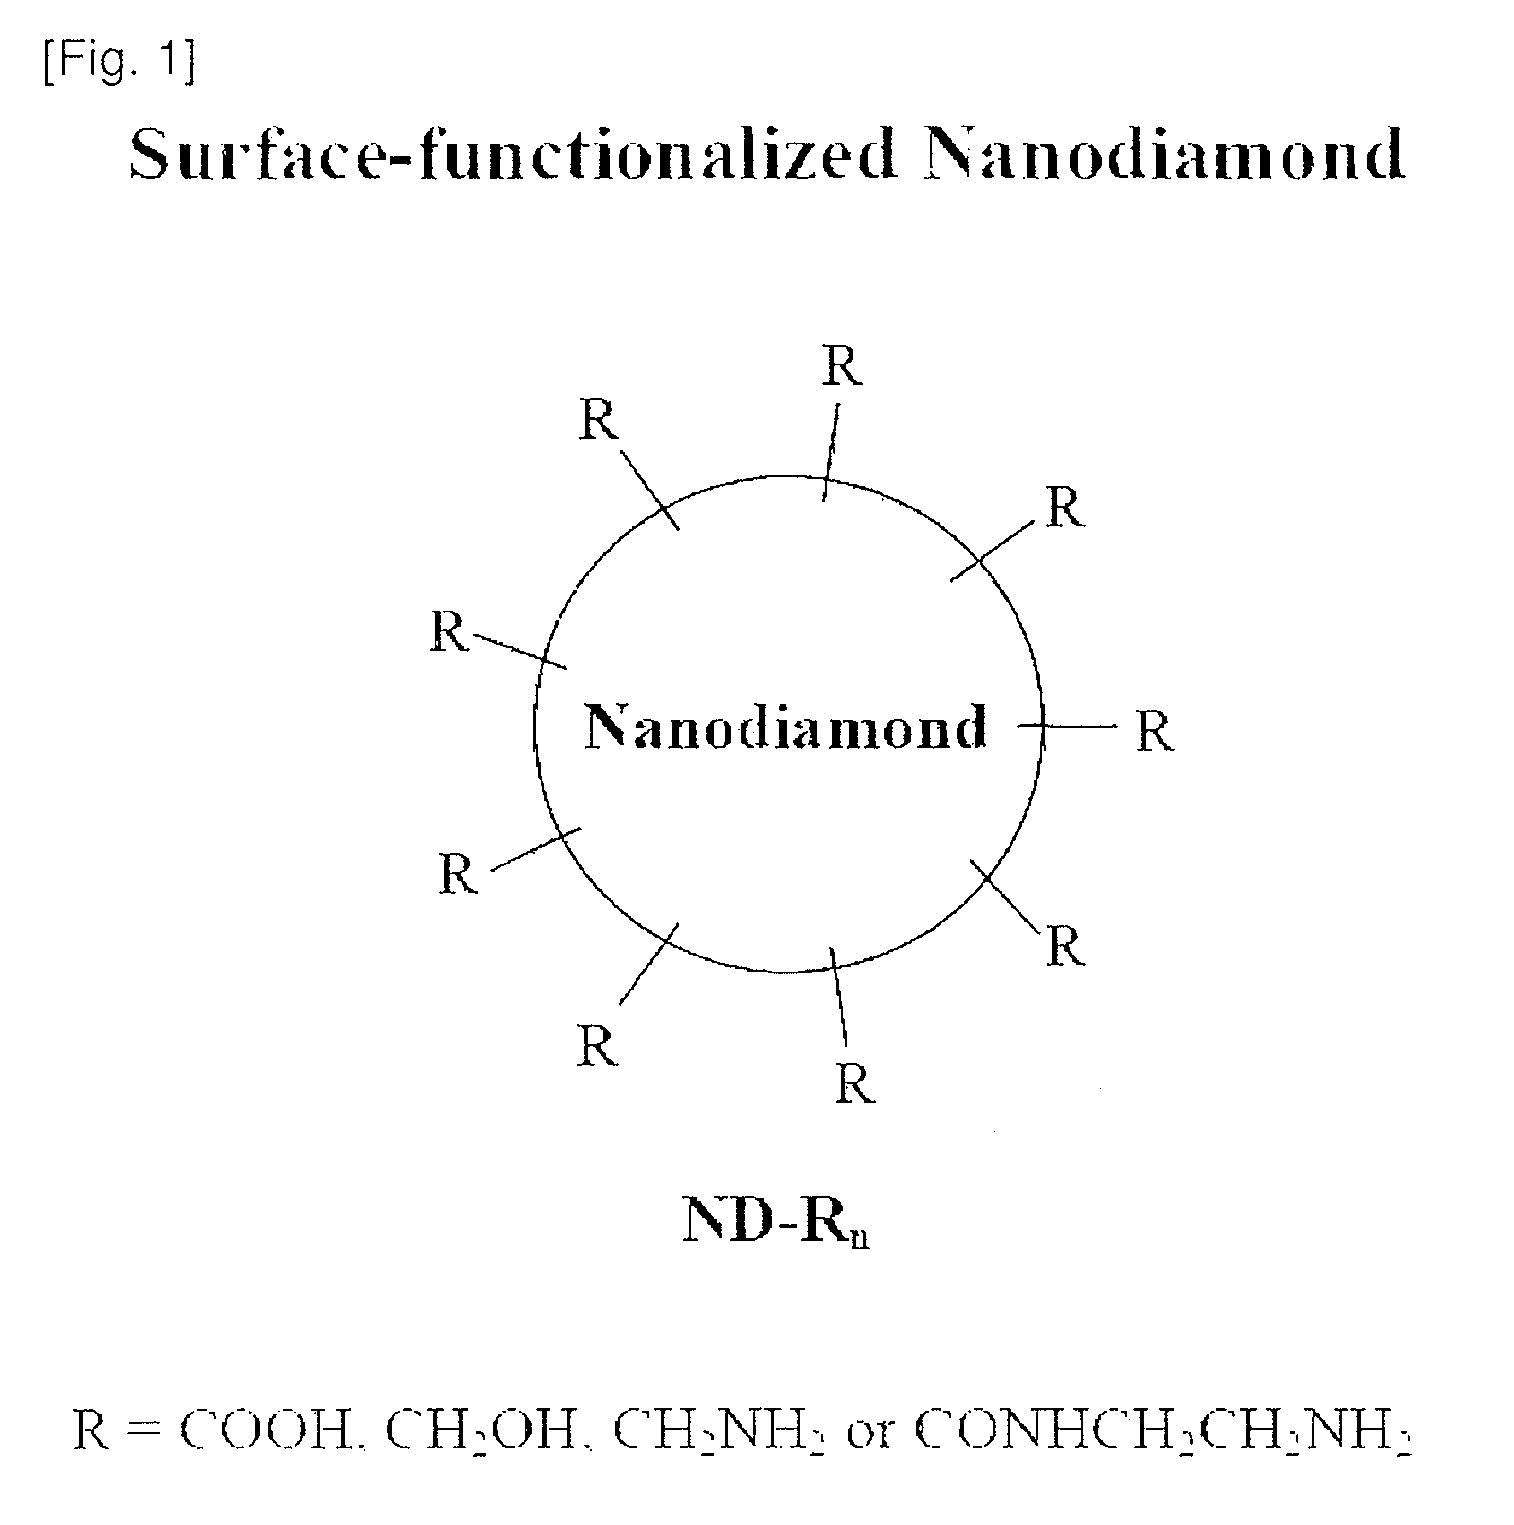 Nanodiamond compounds synthesized by surface functionalization